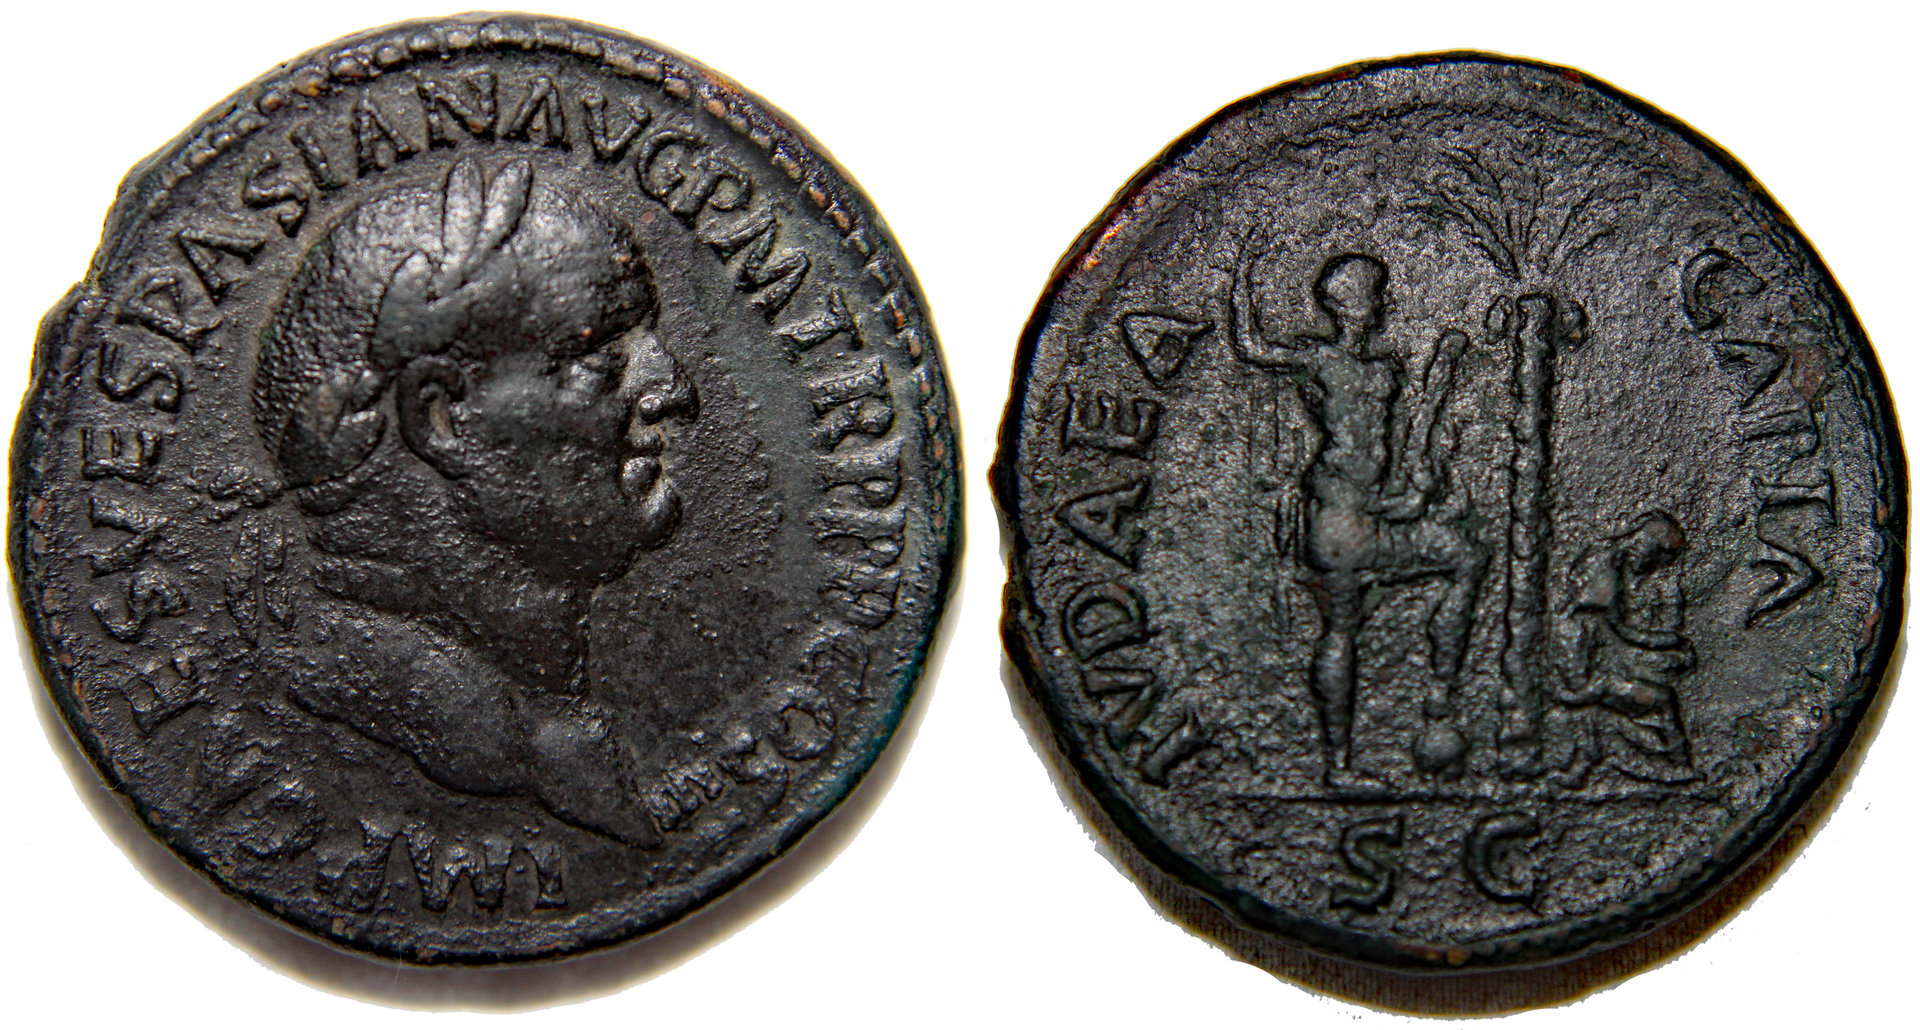 D-Camera Vespasian, Sestertius, Judaea Capta, Palladium purchase, late 90s,  6-1-20.jpg